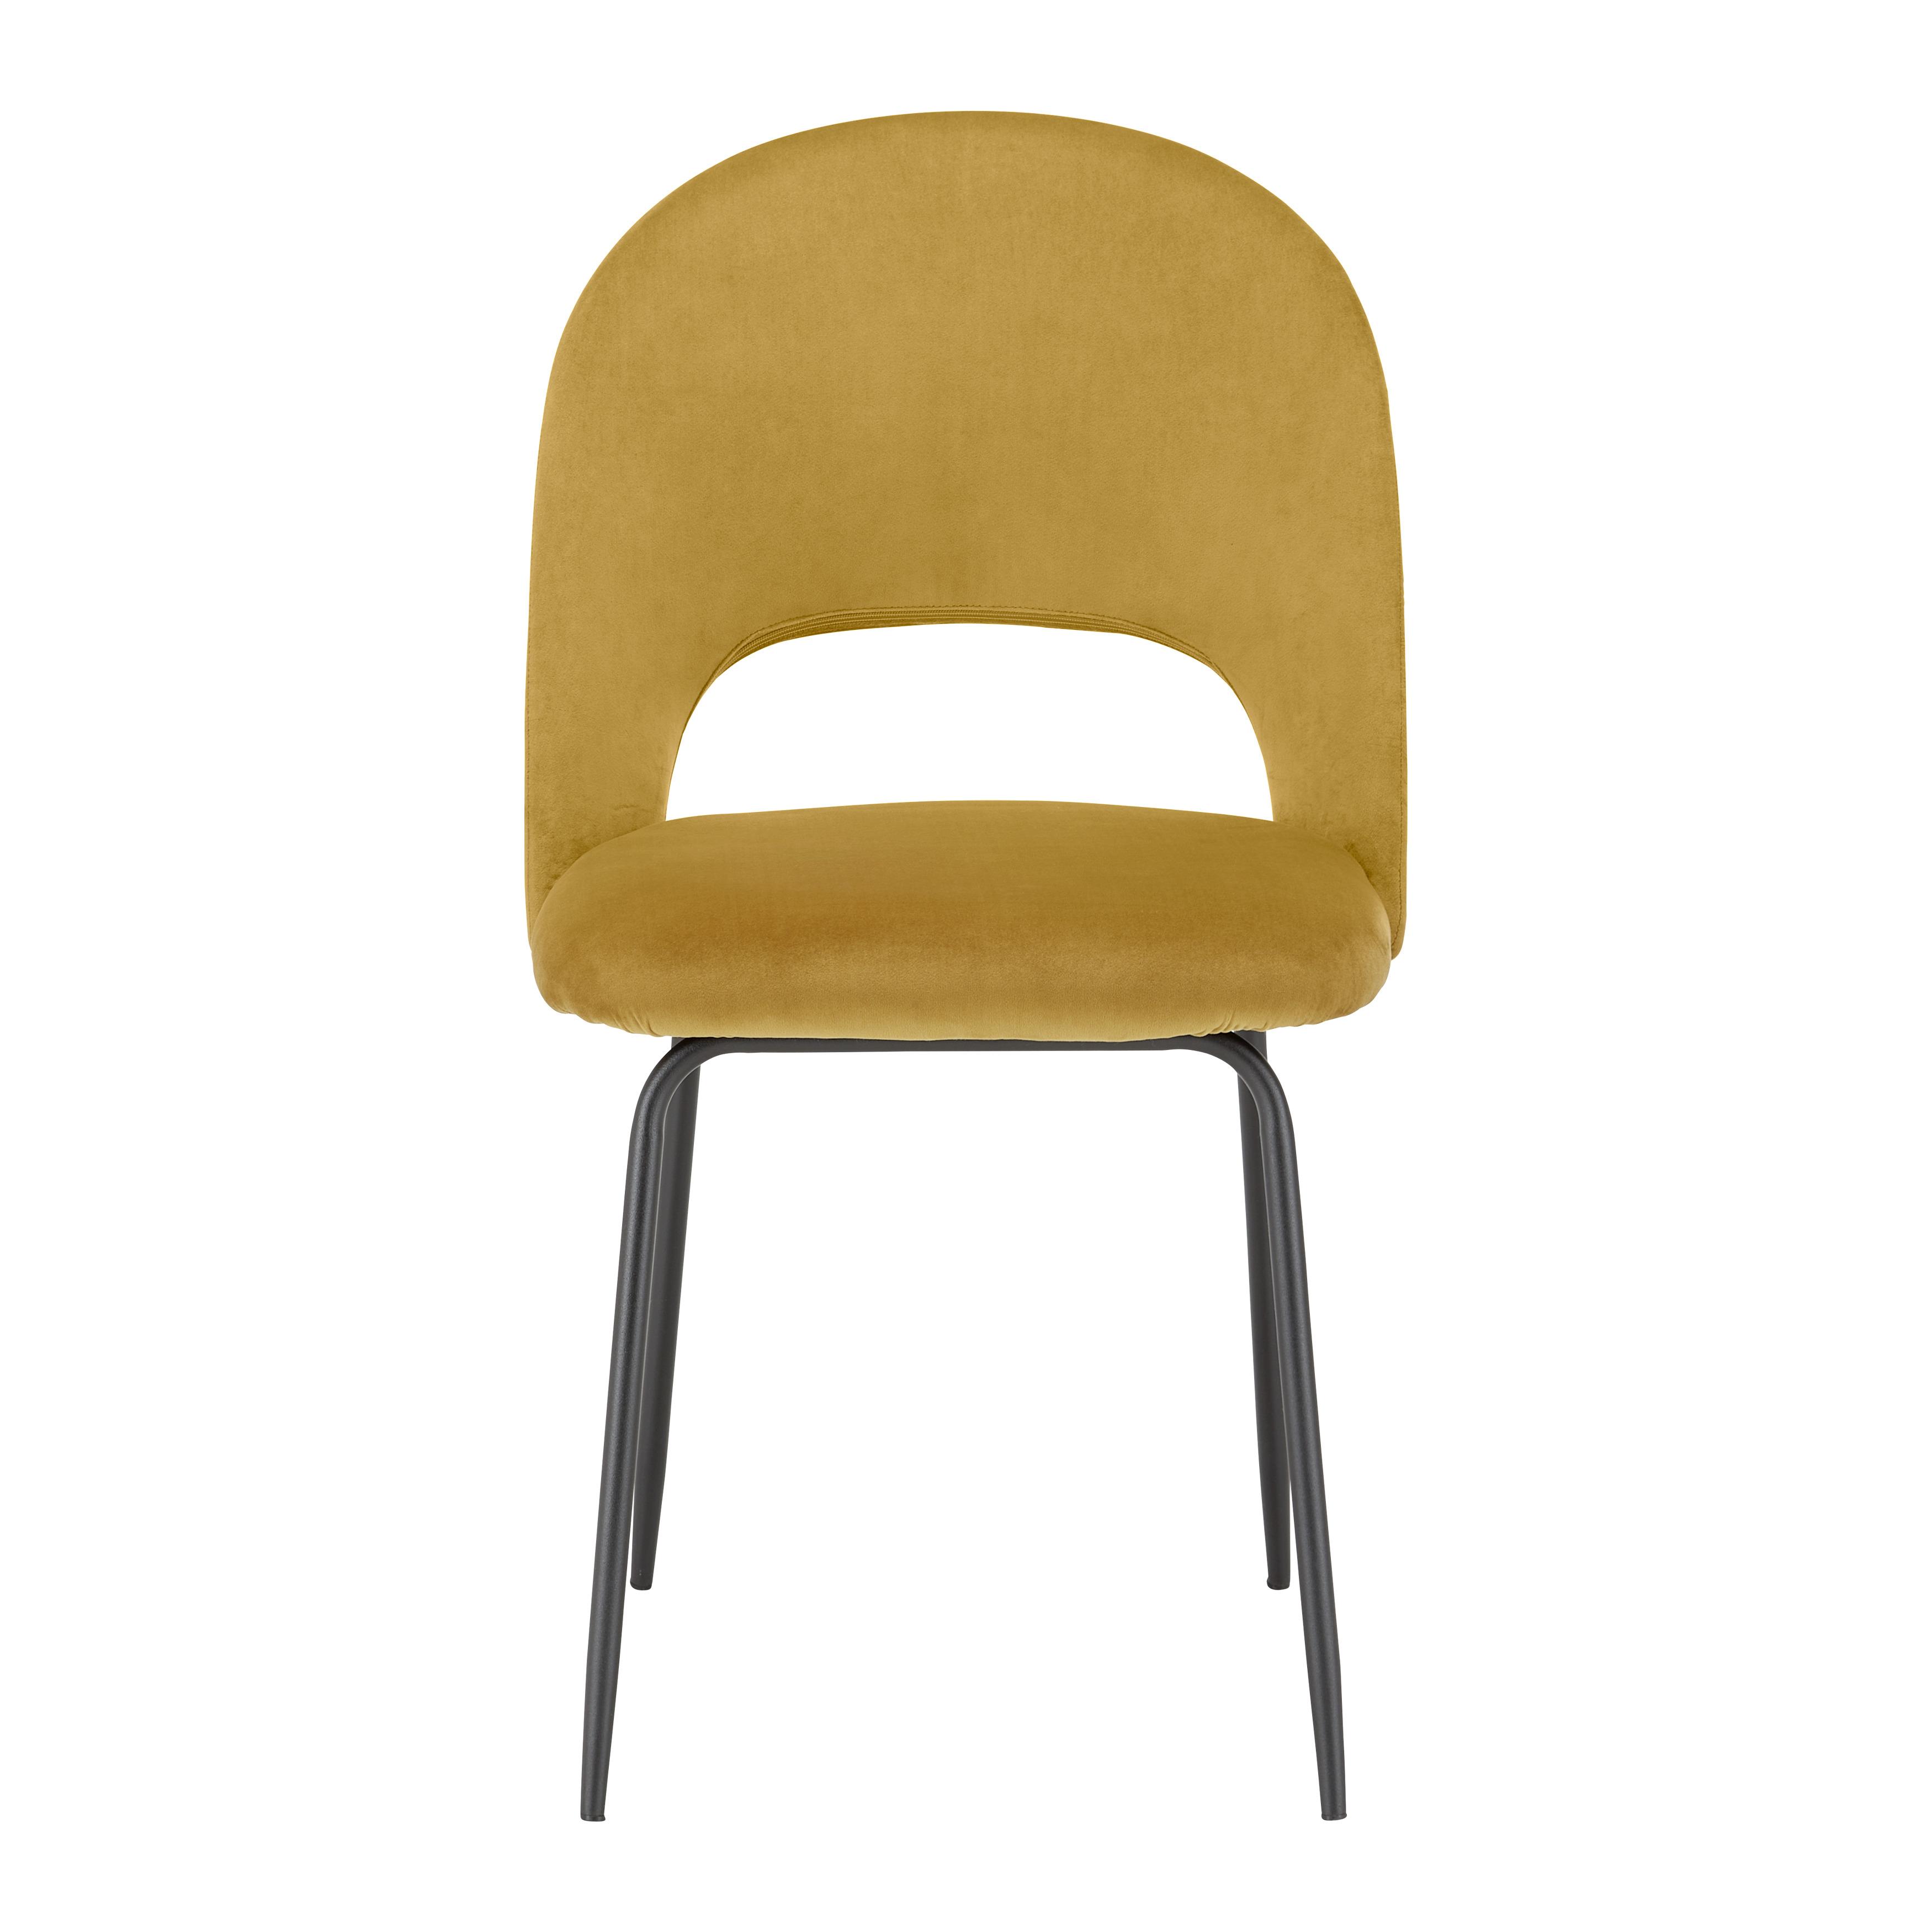 Stuhl "Romy", Webstoff, gelb, Gepolstert - Gelb/Schwarz, MODERN, Textil/Metall (51/88/58cm) - Bessagi Home